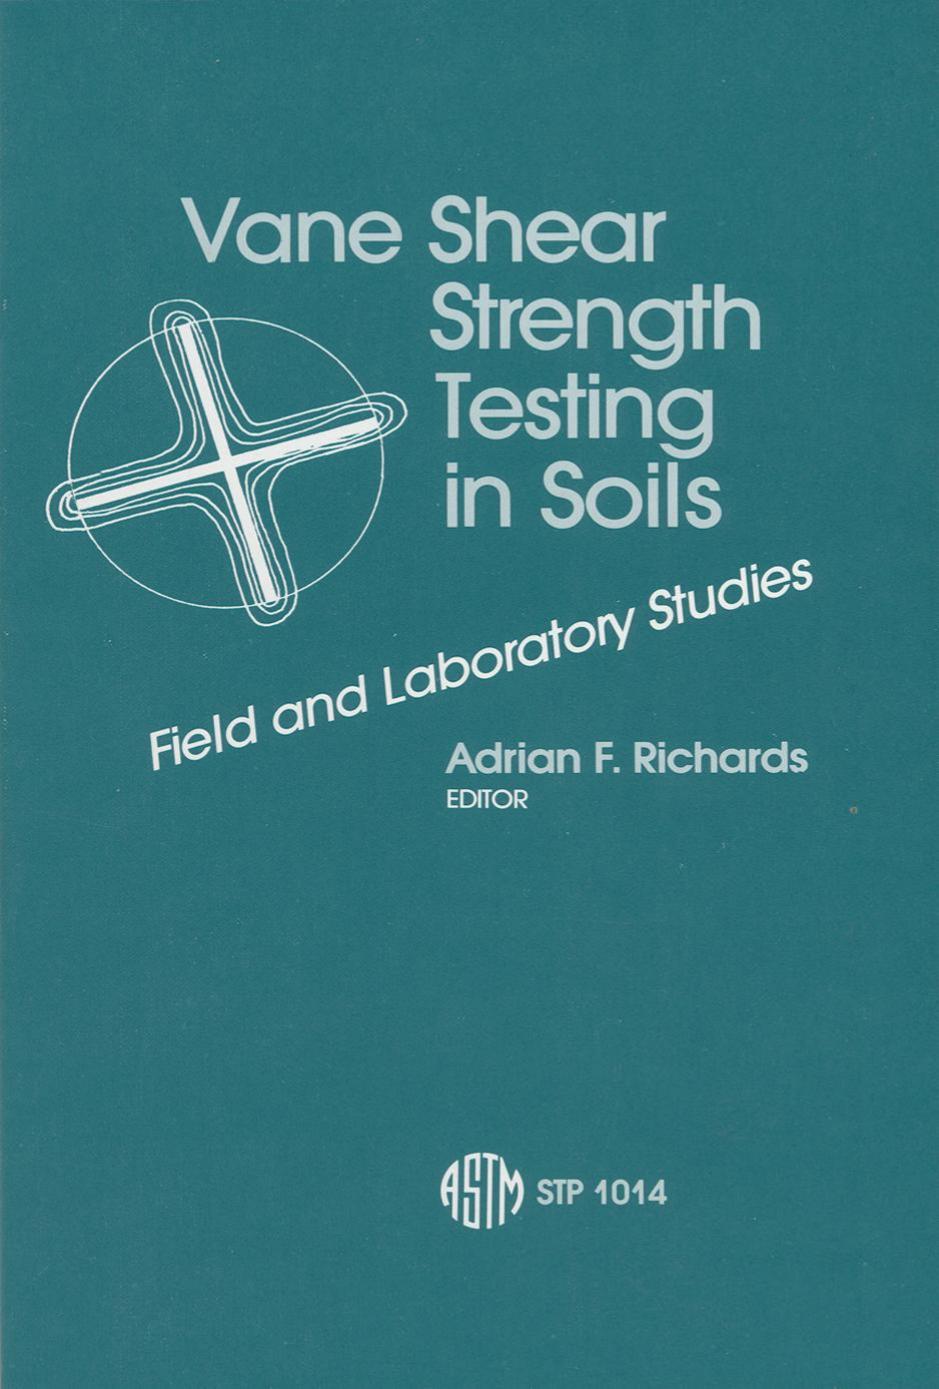 Vane Shear Strength Testing in Soils: Field and Laboratory Studies